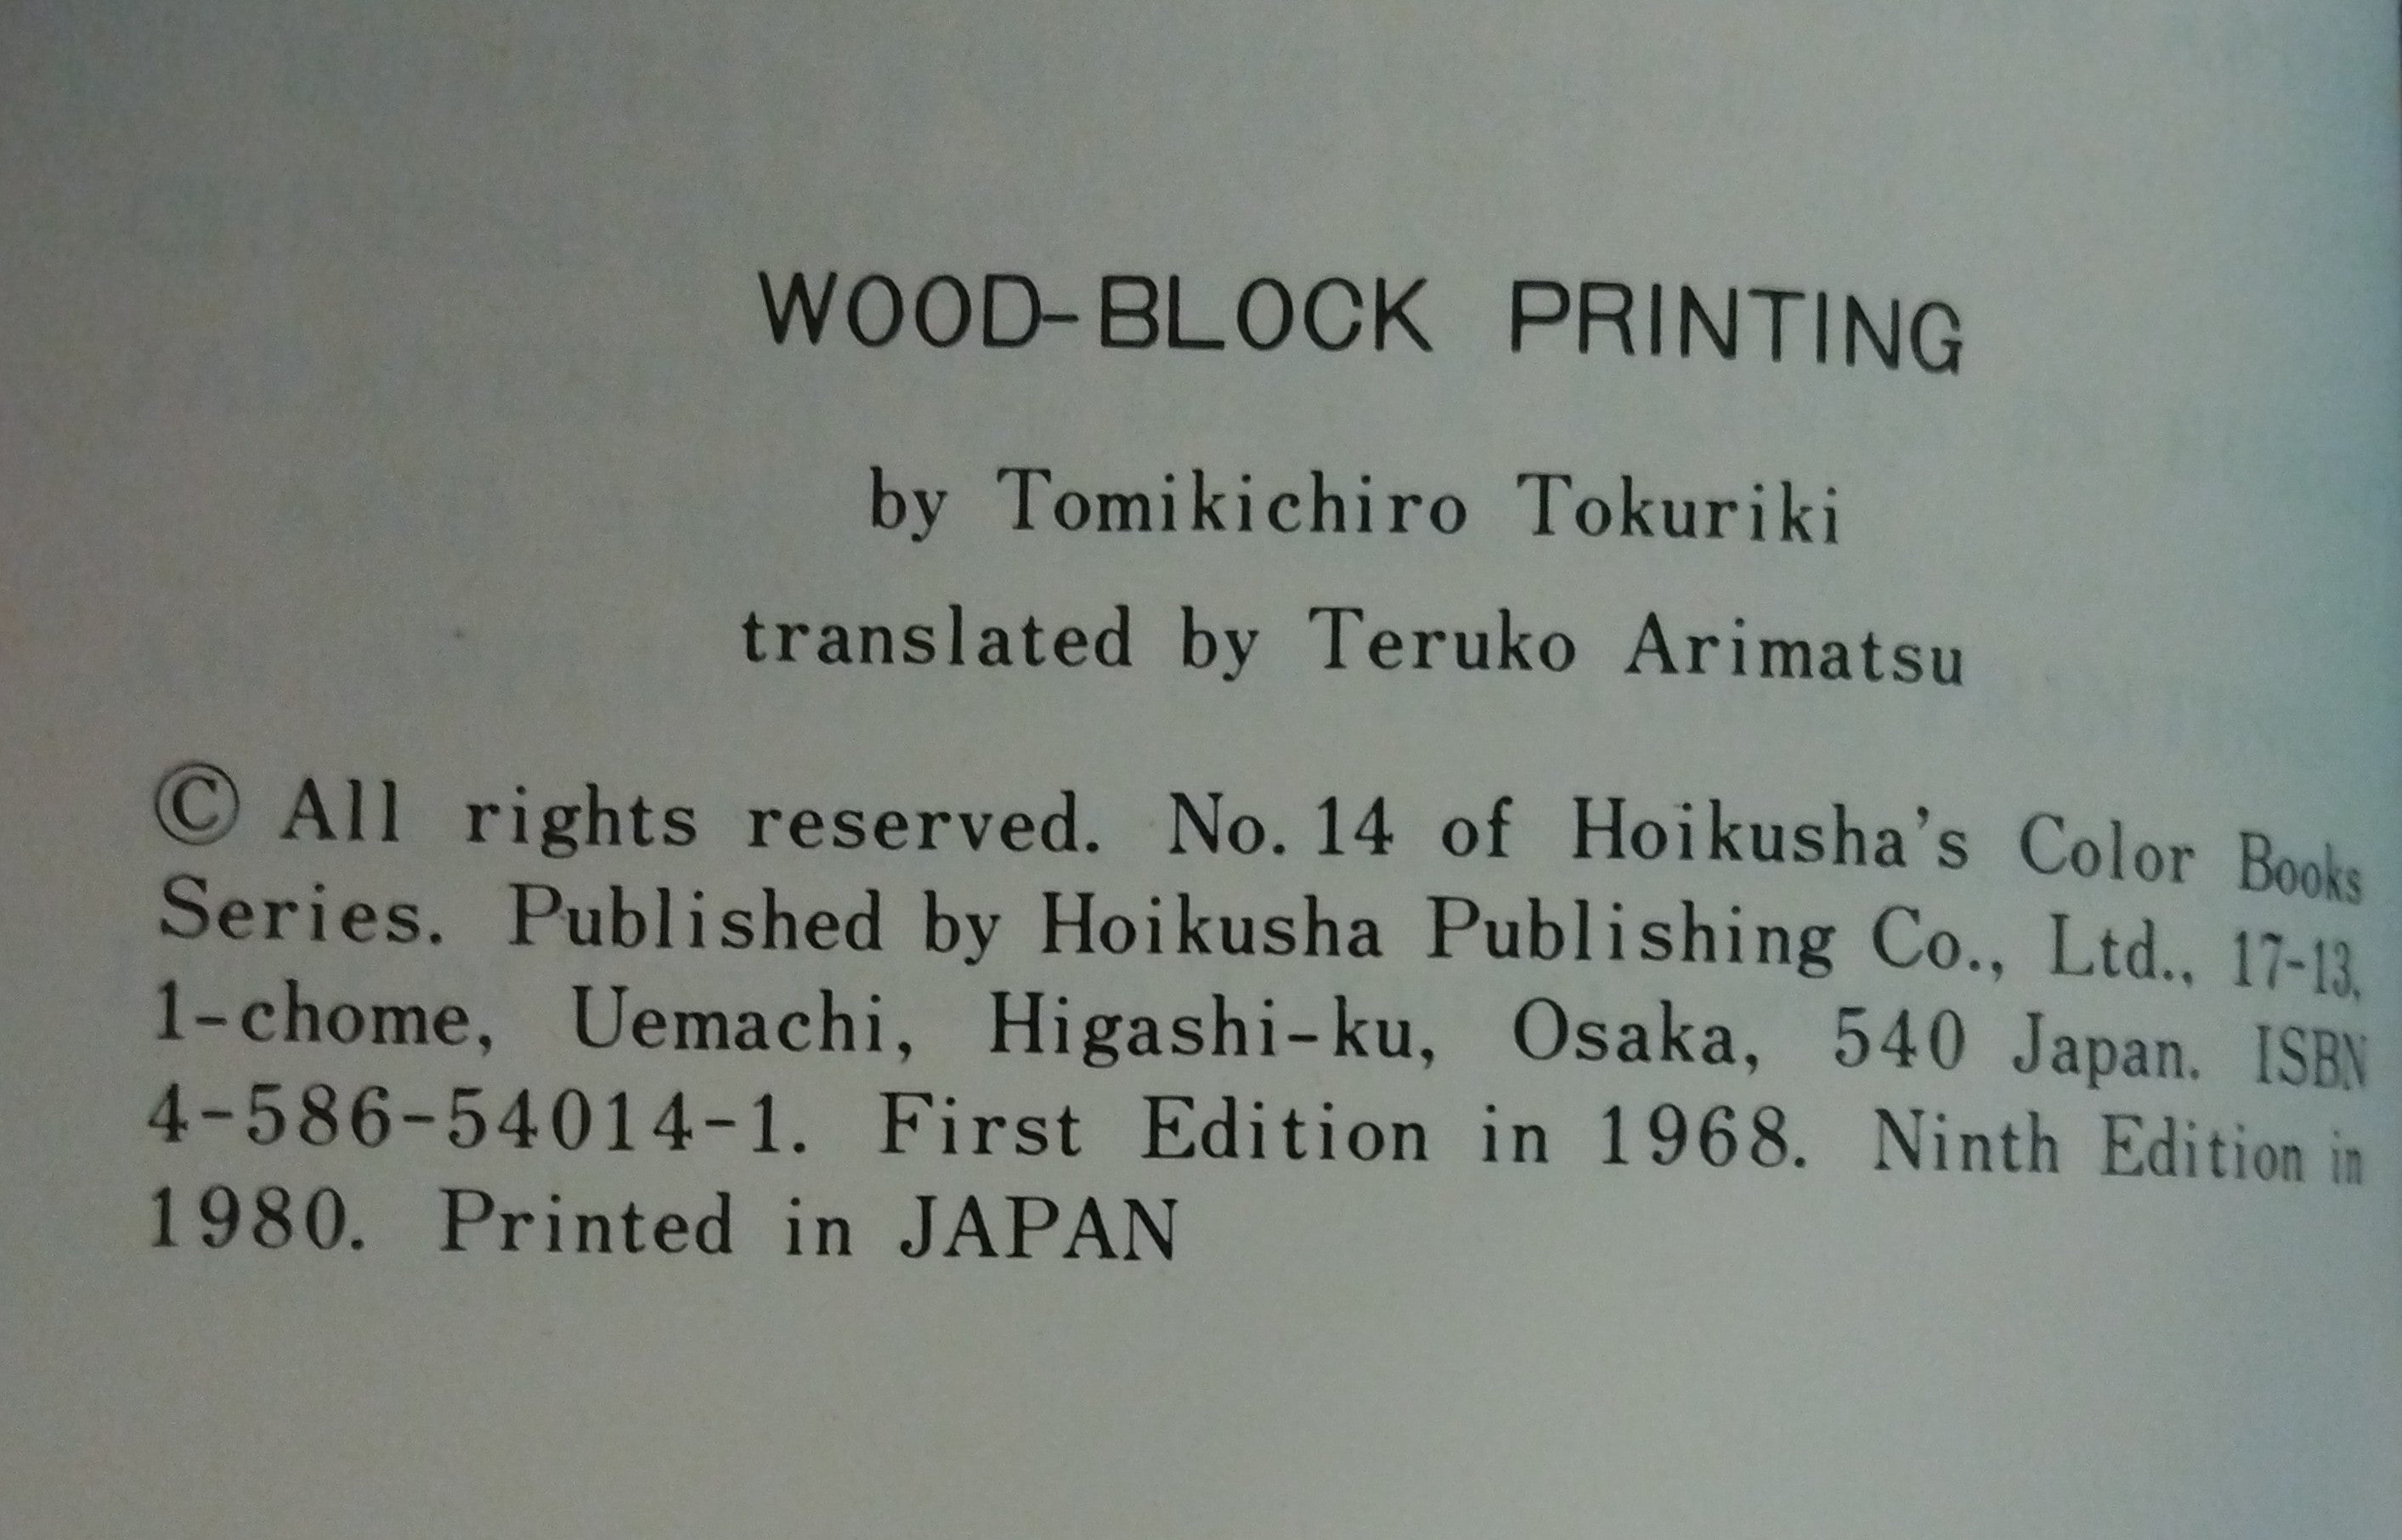 "Woodblock Printing" (Hoikusha Color Books Series, No. 14), by Tomikichiro Tokuriki; Thiel Collection